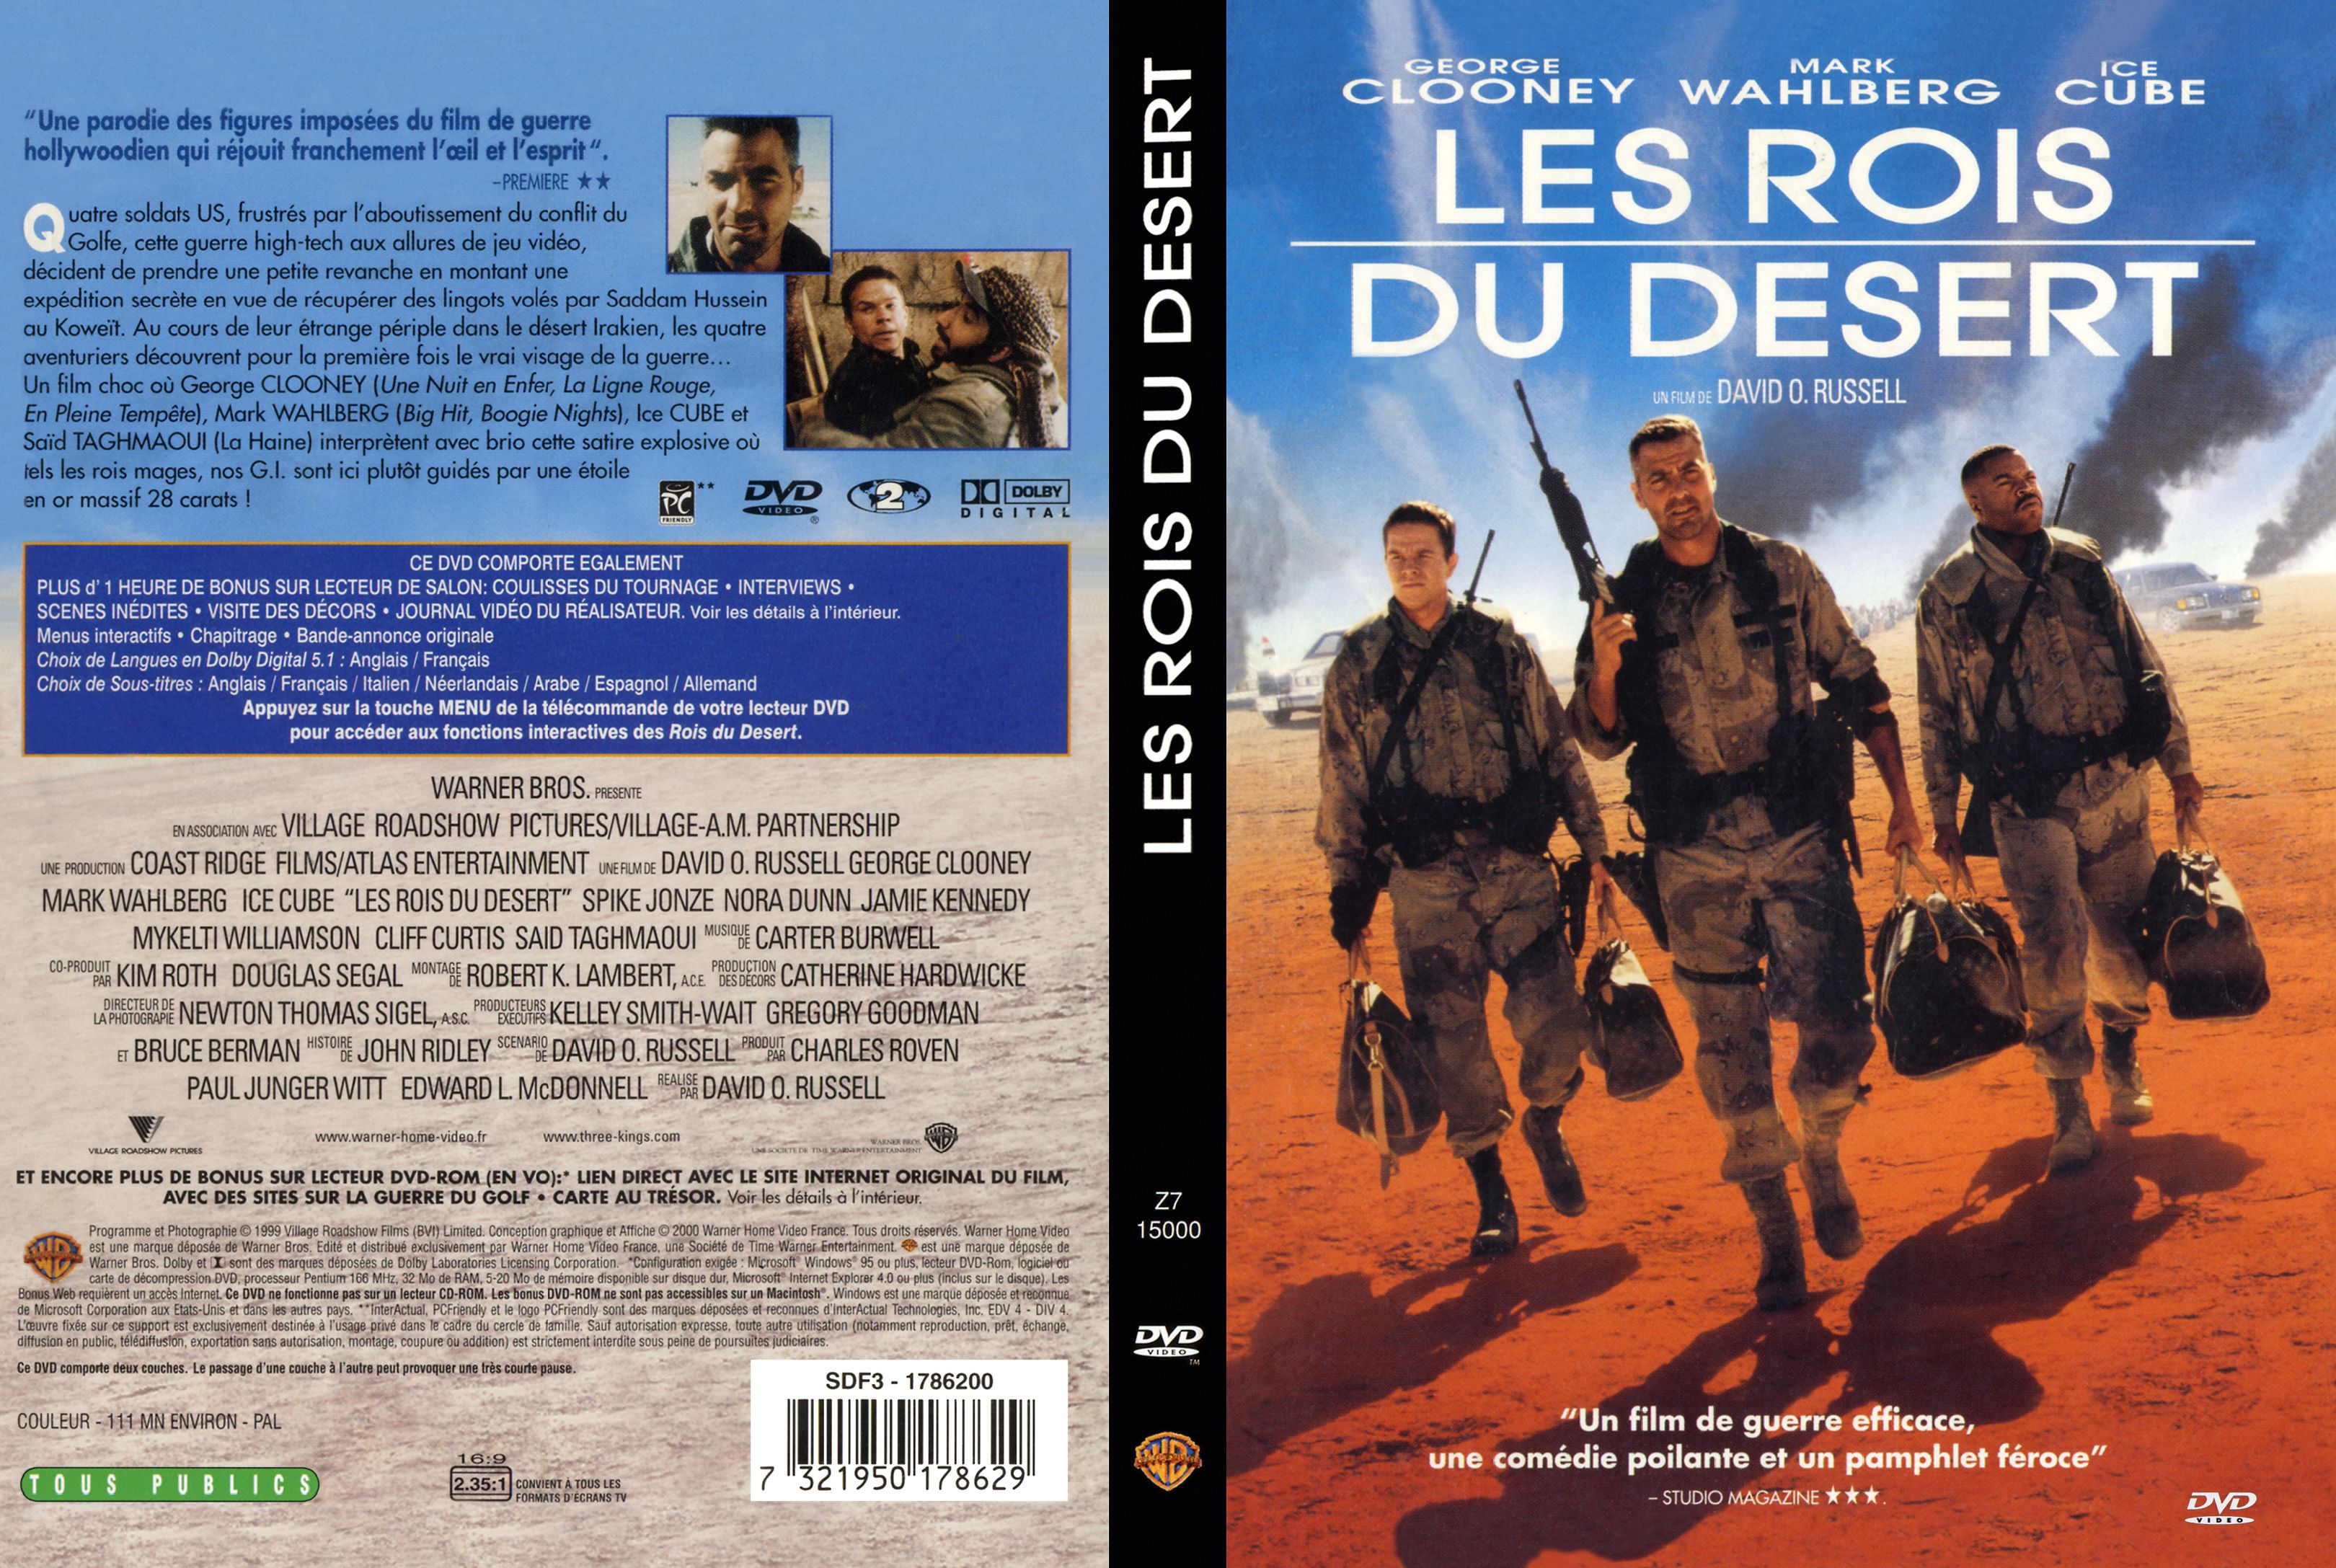 Jaquette DVD Les rois du dsert v2